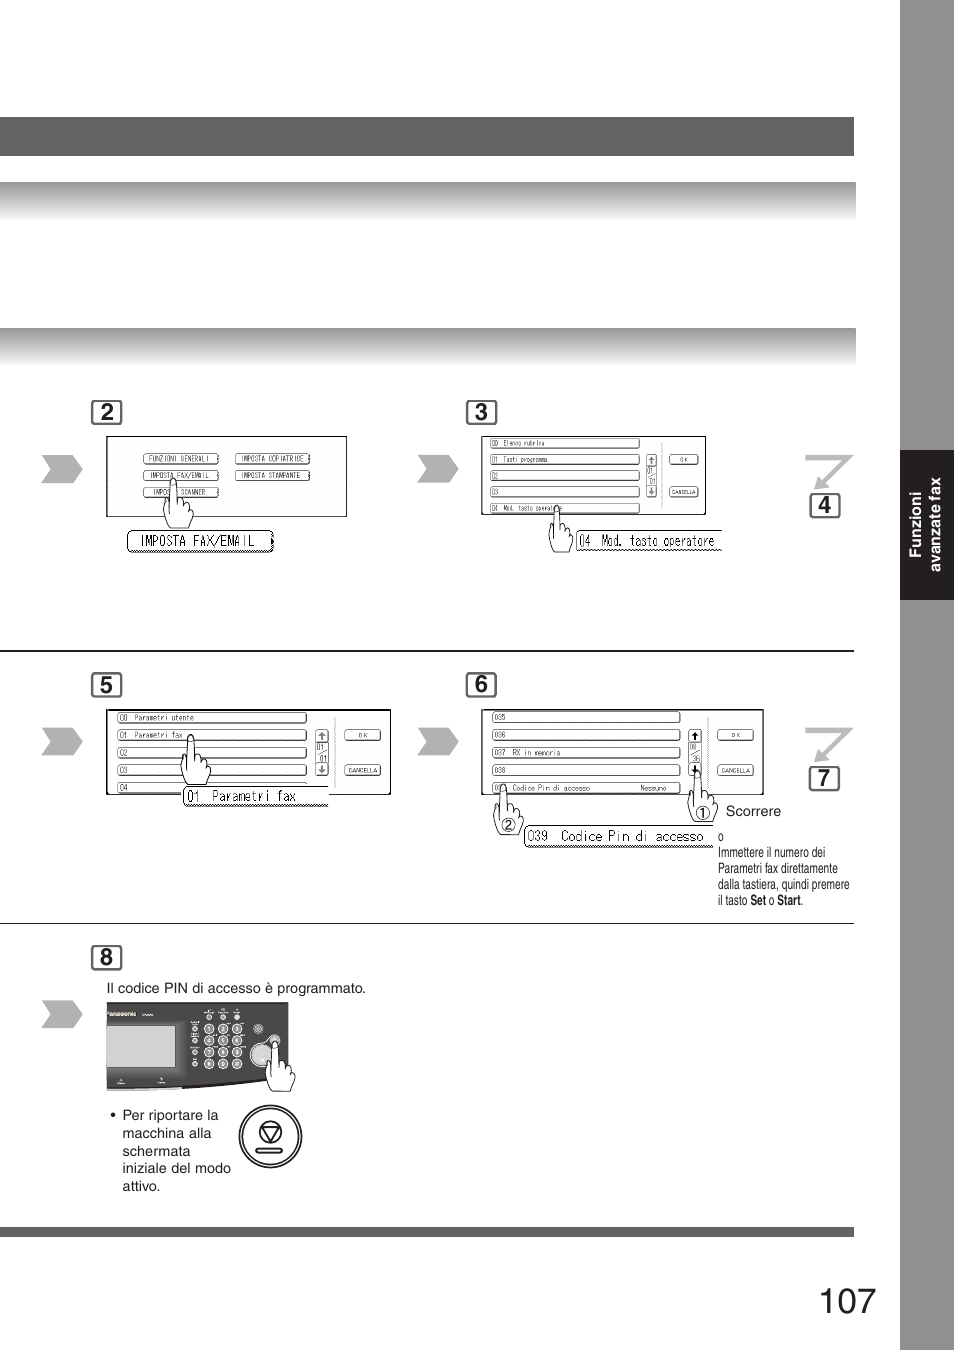 Panasonic DP8035 Manuale d'uso | Pagina 107 / 196